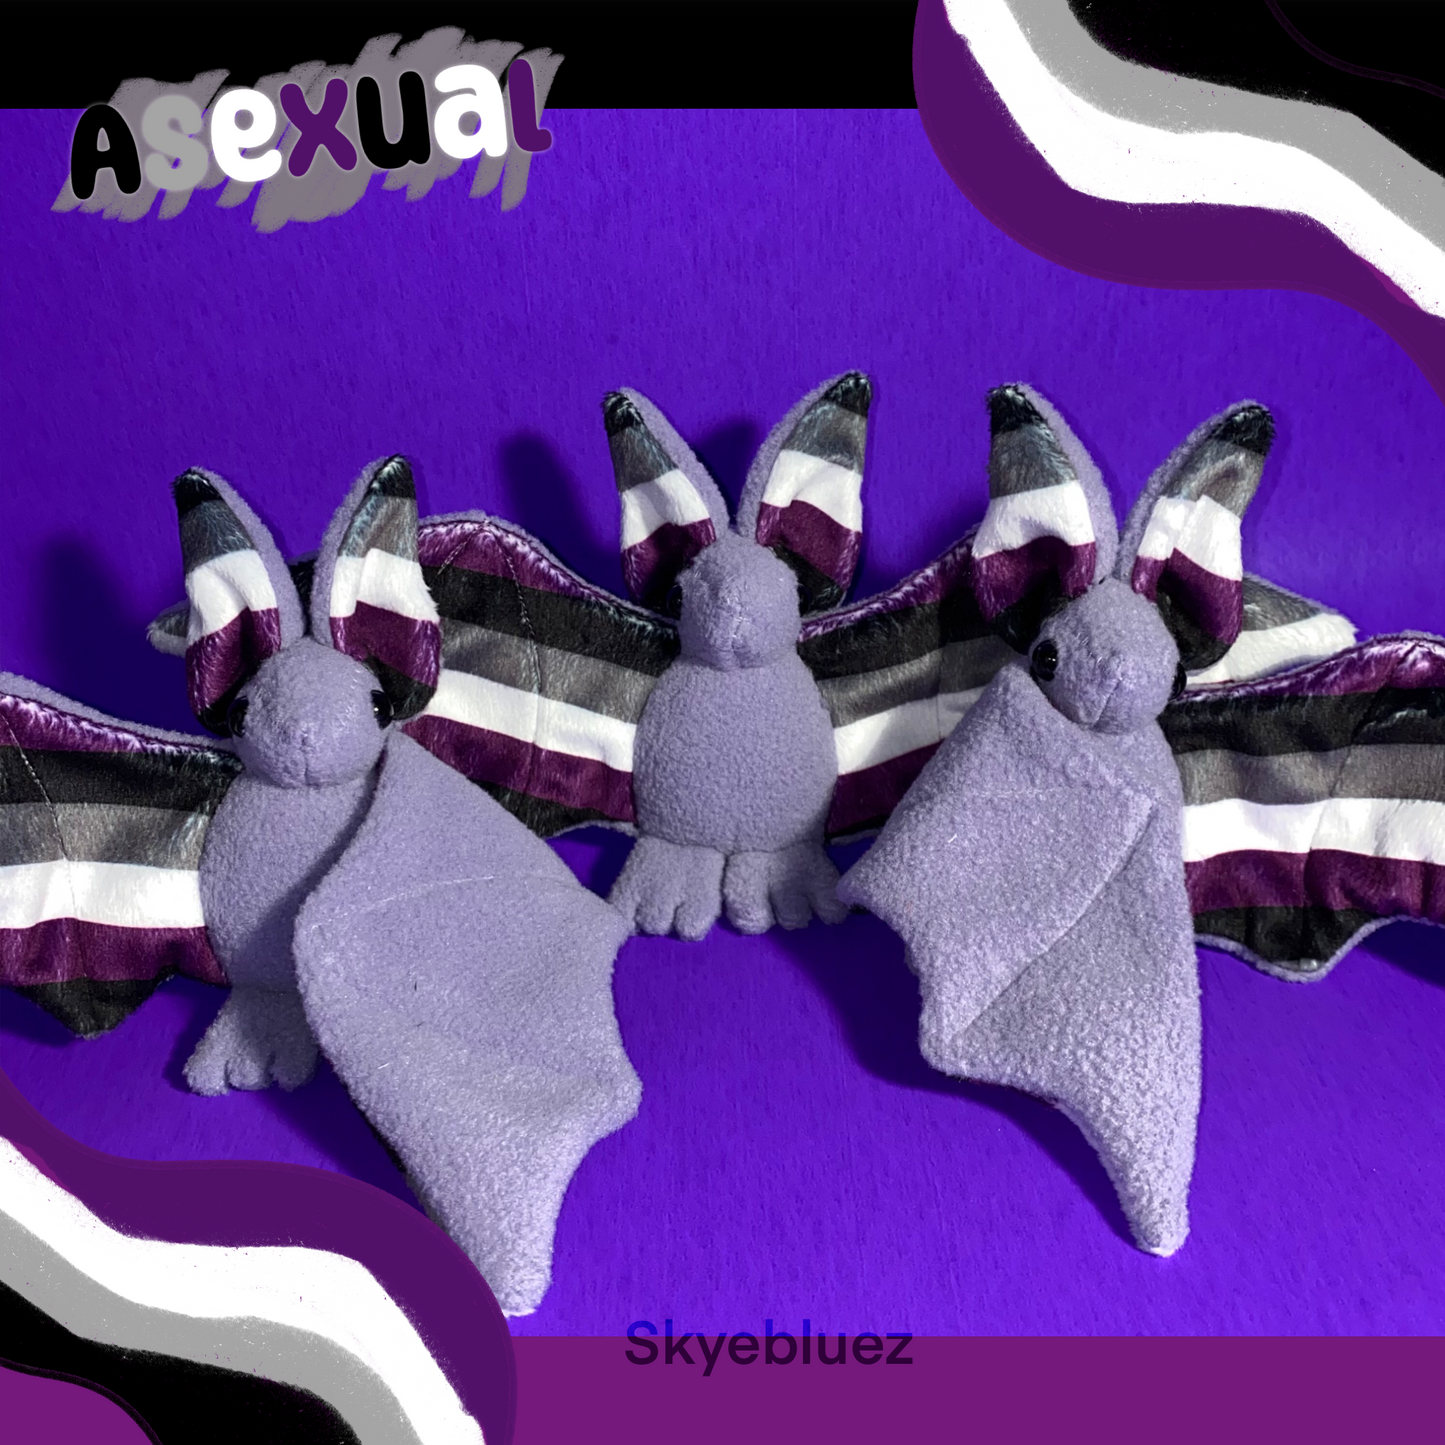 Peluche de murciélago asexual